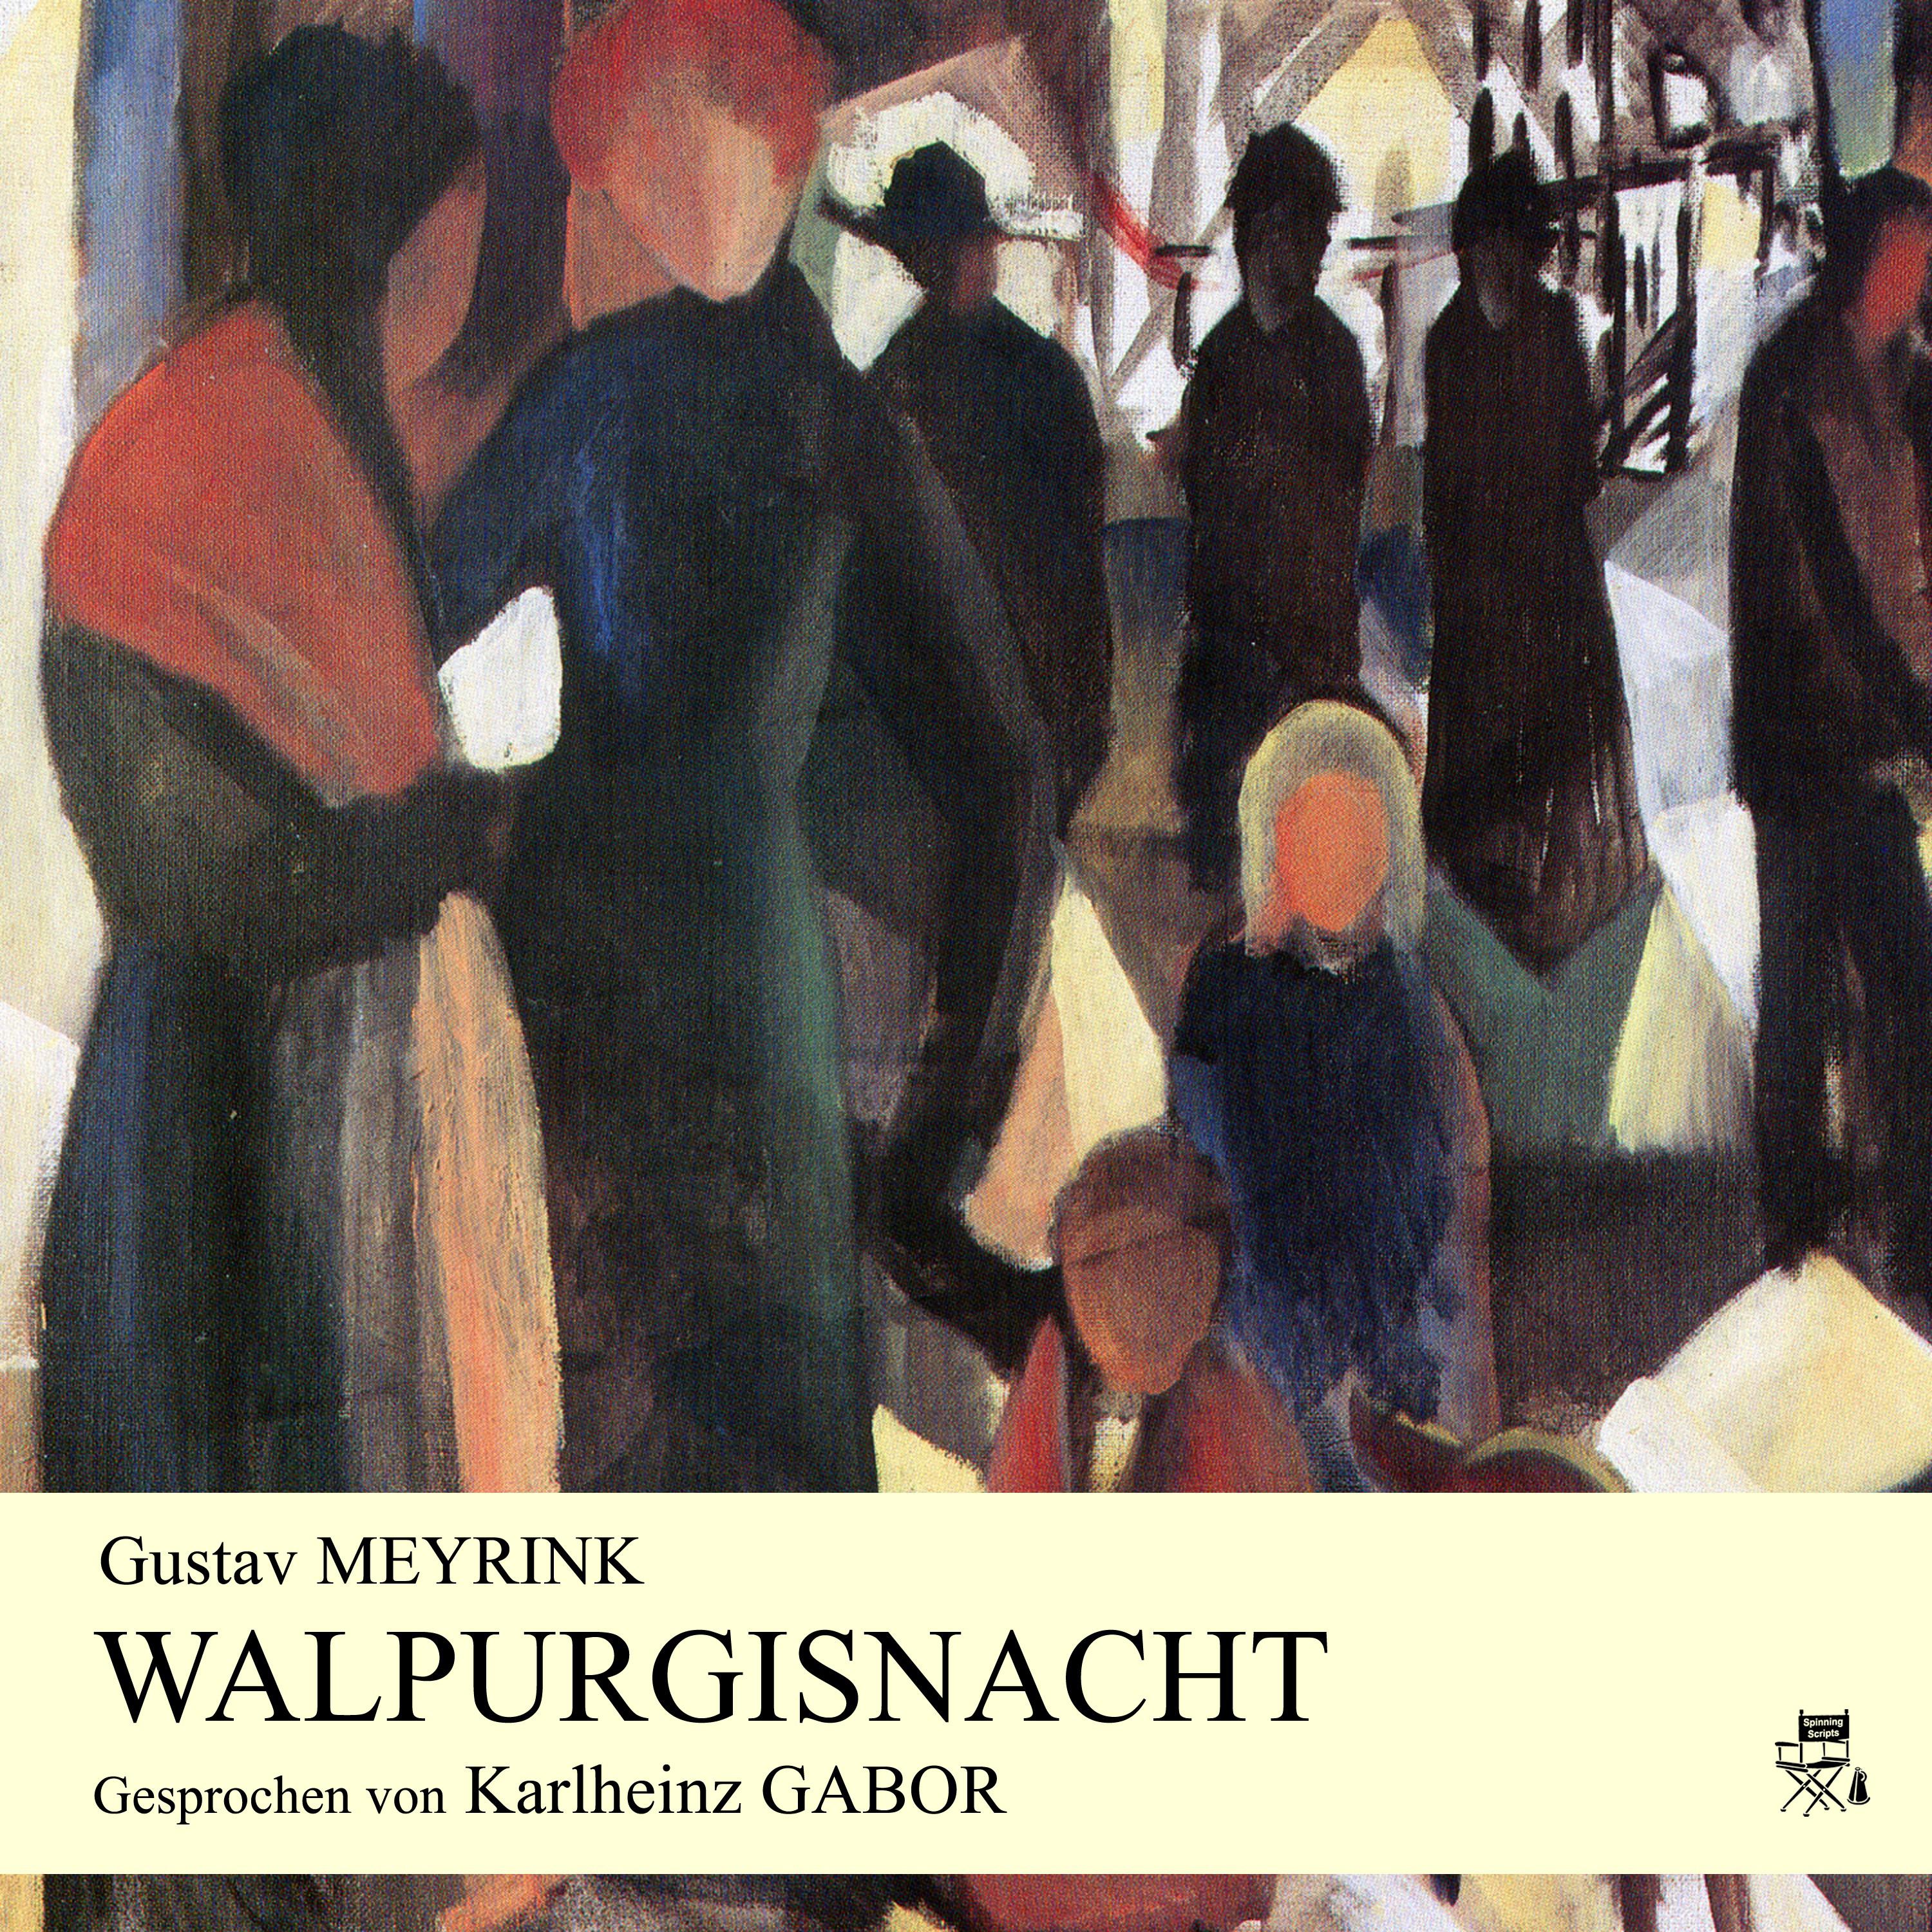 Kapitel 7: Walpurgisnacht (Teil 43)